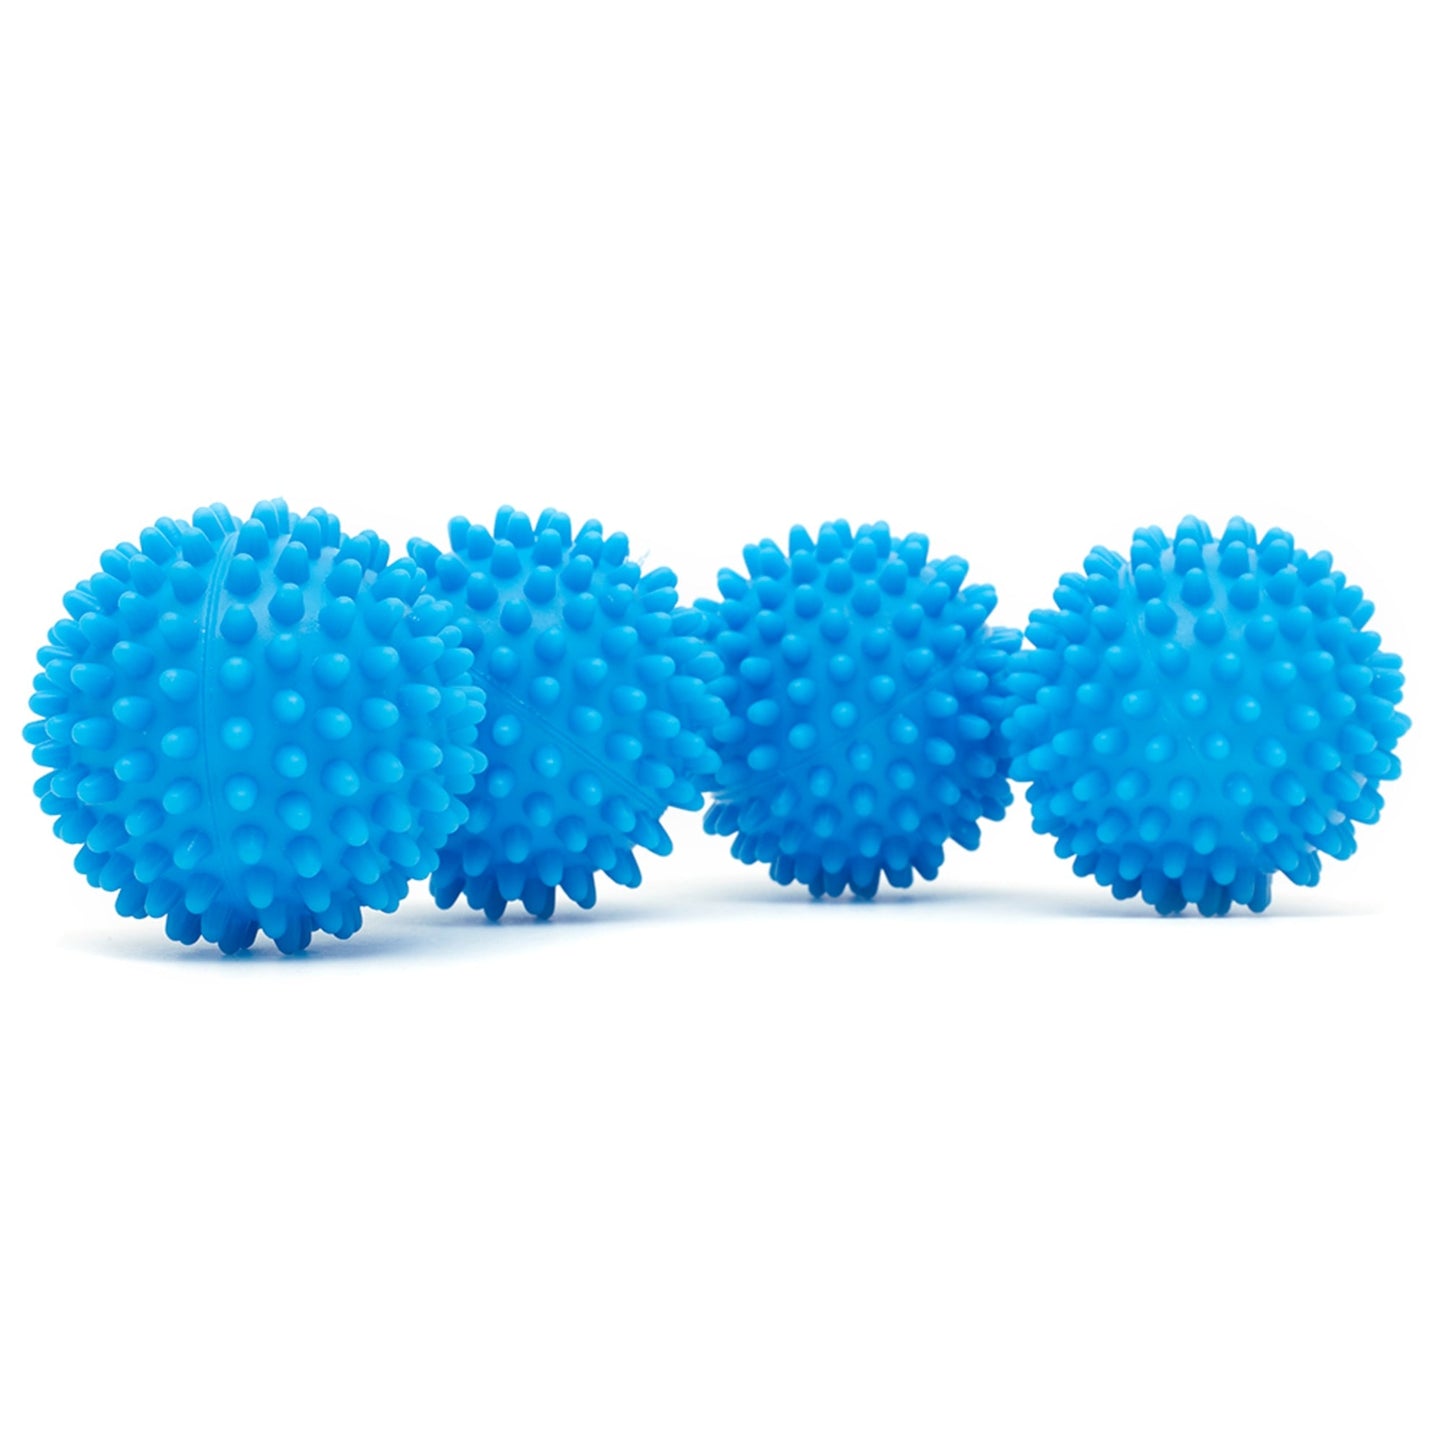 Plastic Dryer Balls, (Pack of 4), Blue